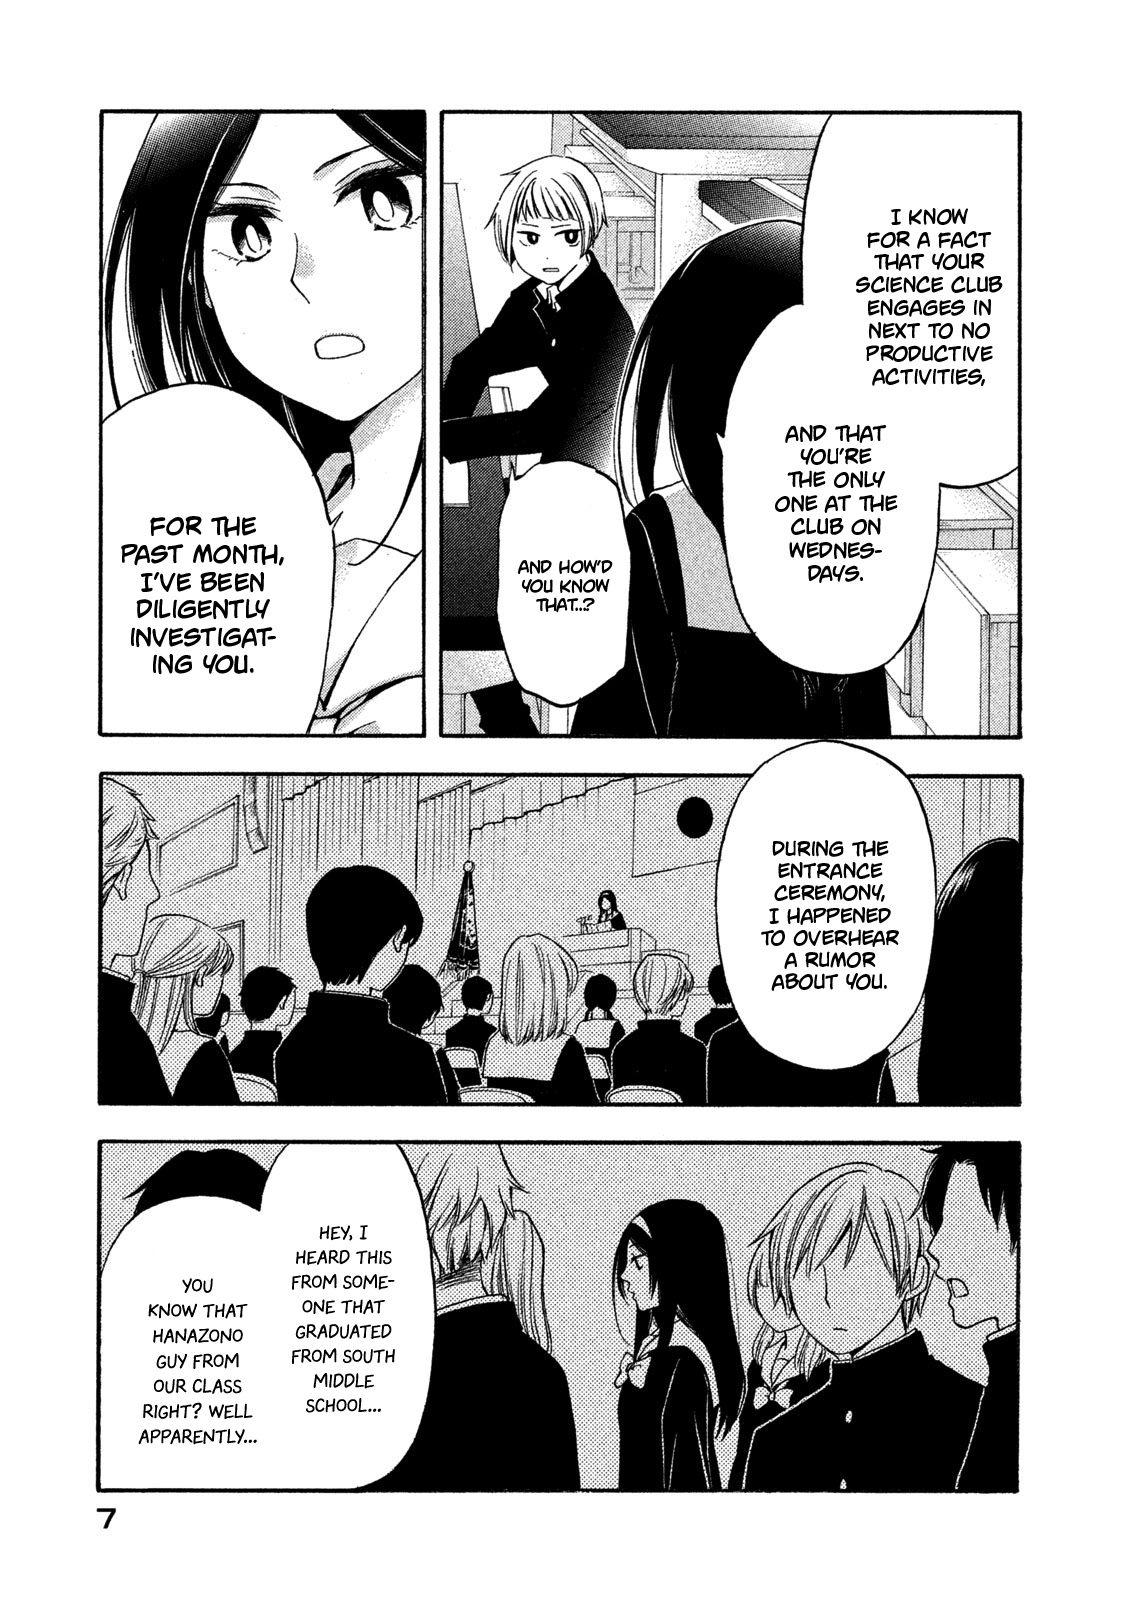 Hanazono And Kazoe's Bizarre After School Rendezvous - chapter 1 - #5